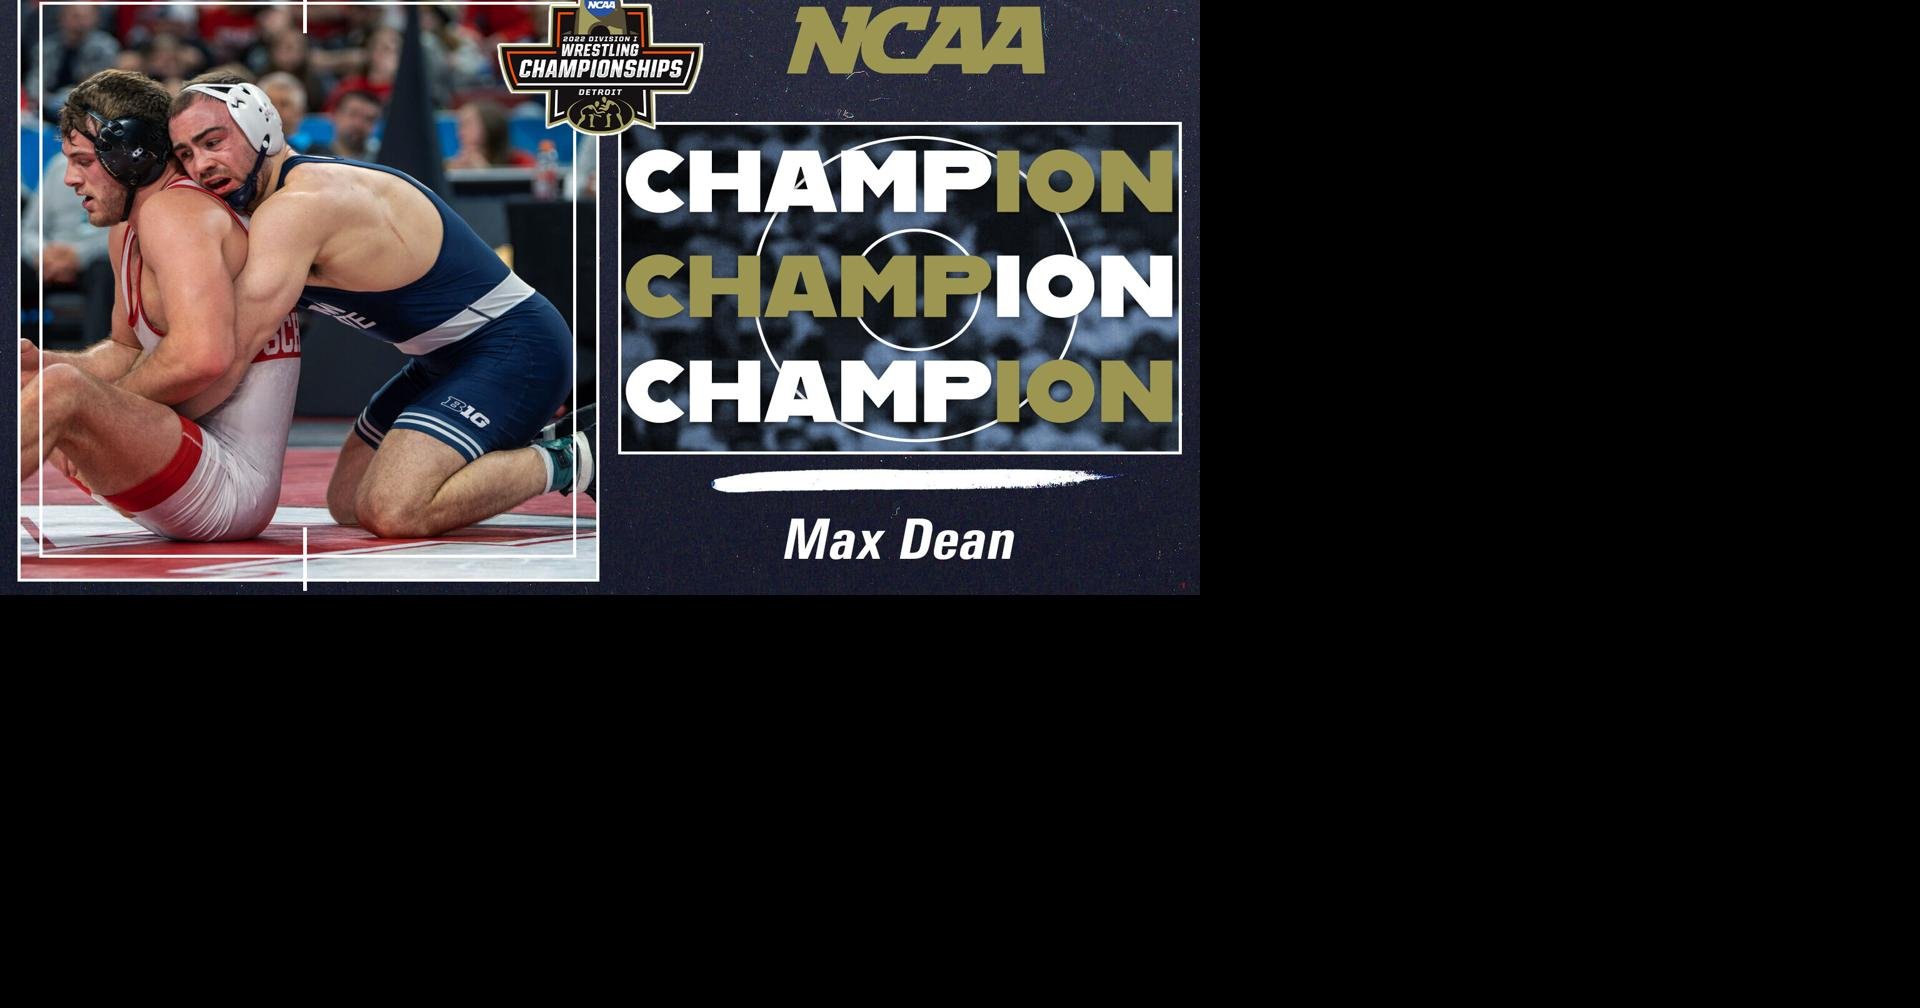 Max Dean wrestling national champion Graphic collegian.psu.edu